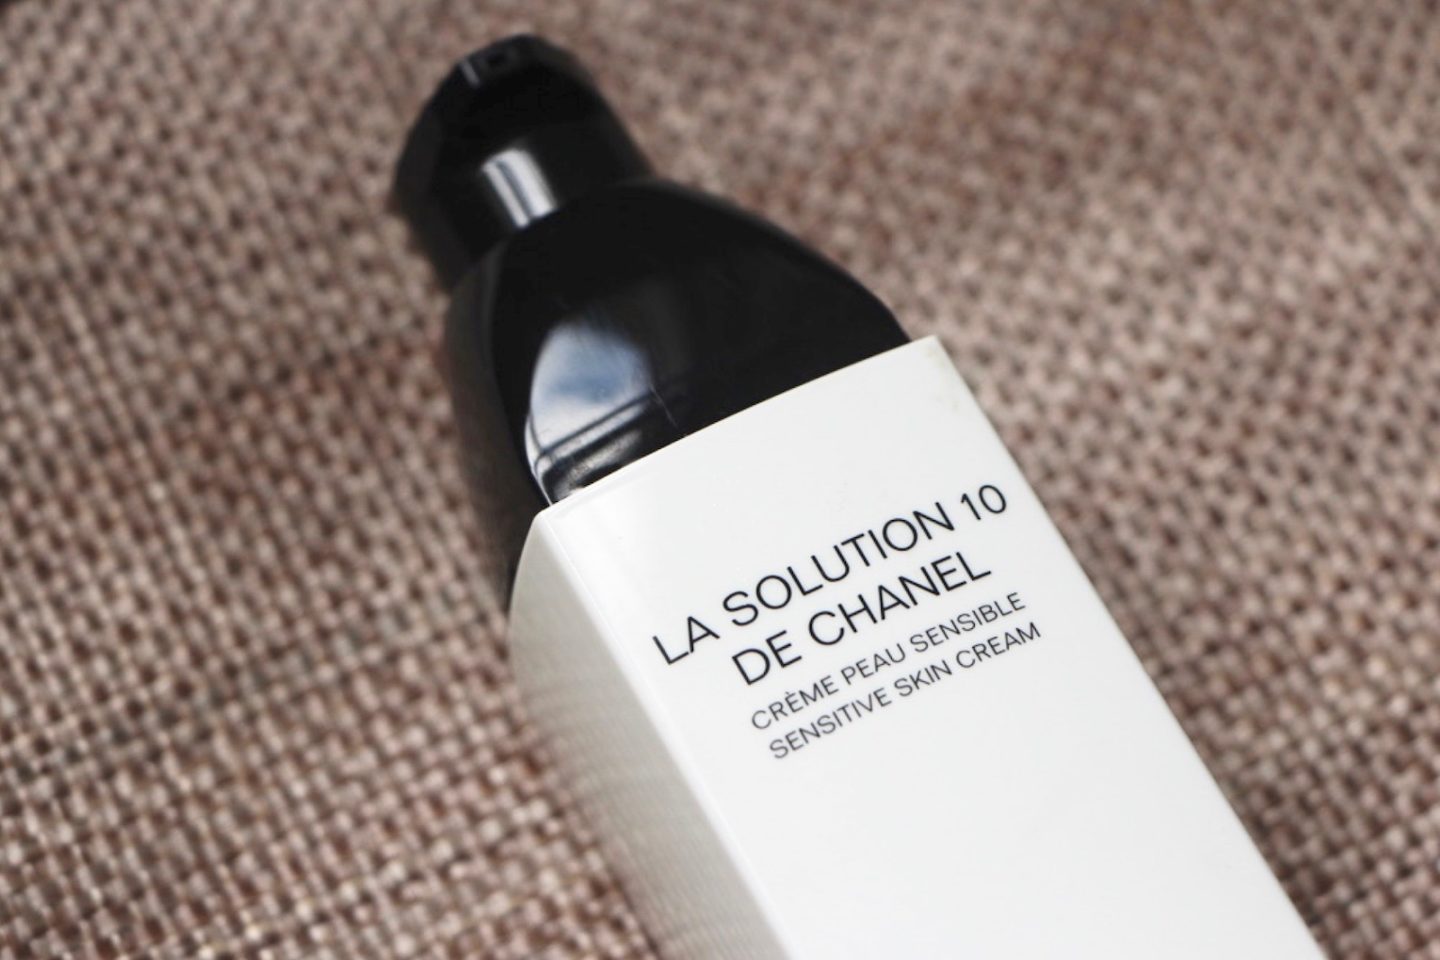 Skincare Review: La Solution 10 De Chanel - Ruth Crilly